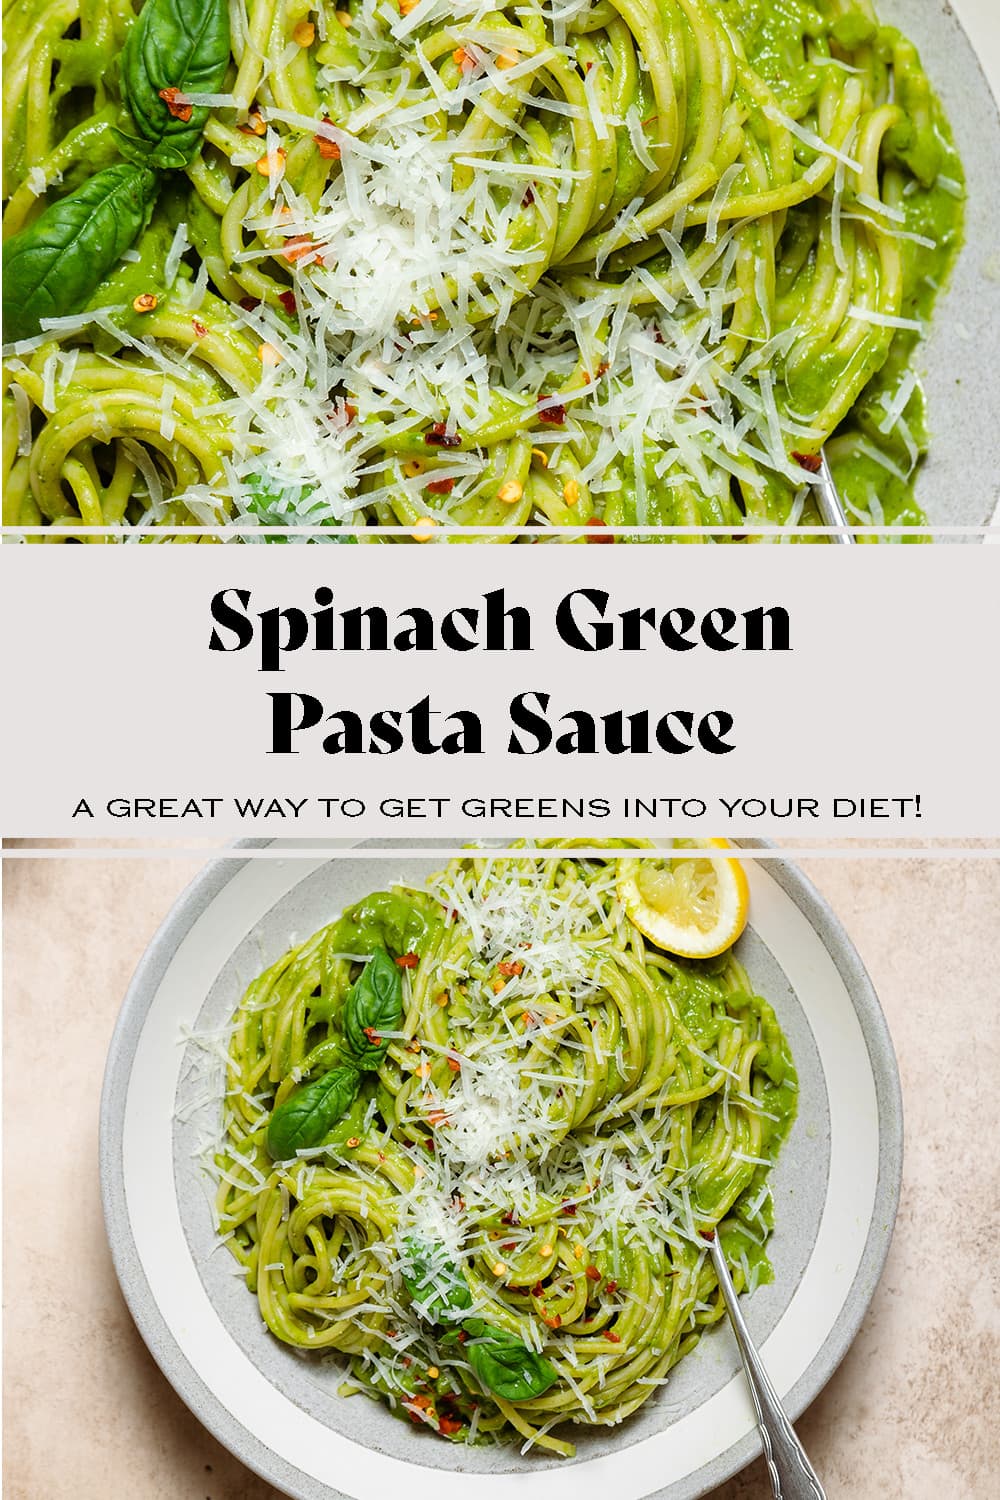 Spinach Green Pasta Sauce